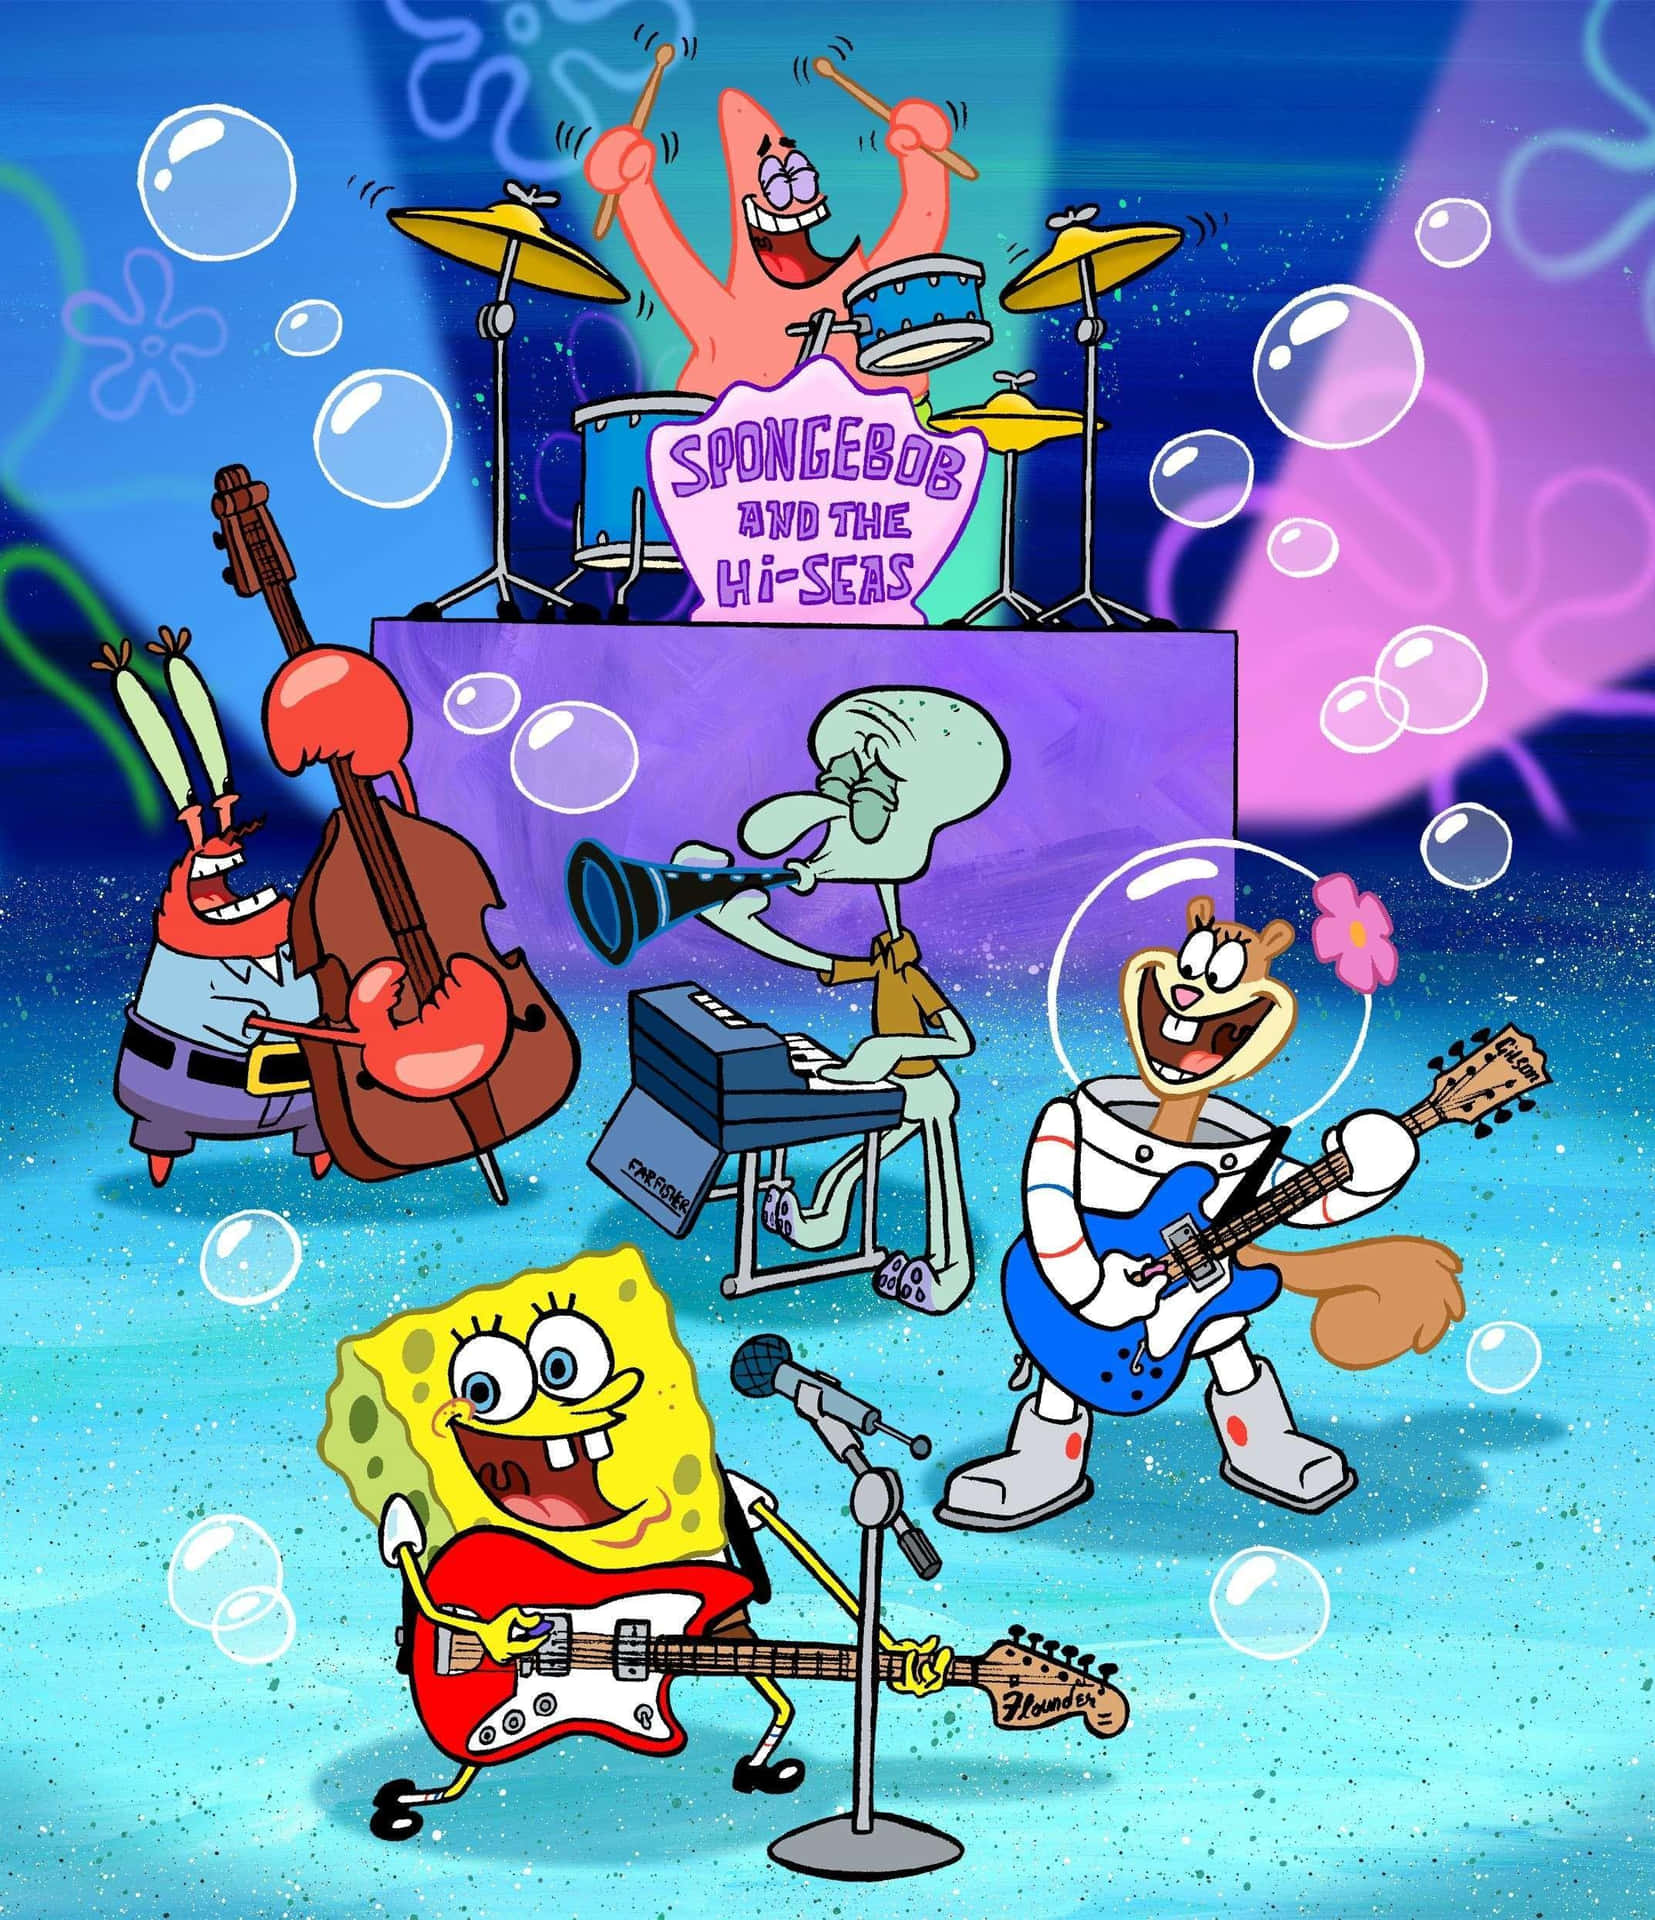 Join the adventures of Spongebob Squarepants in Bikini Bottom!